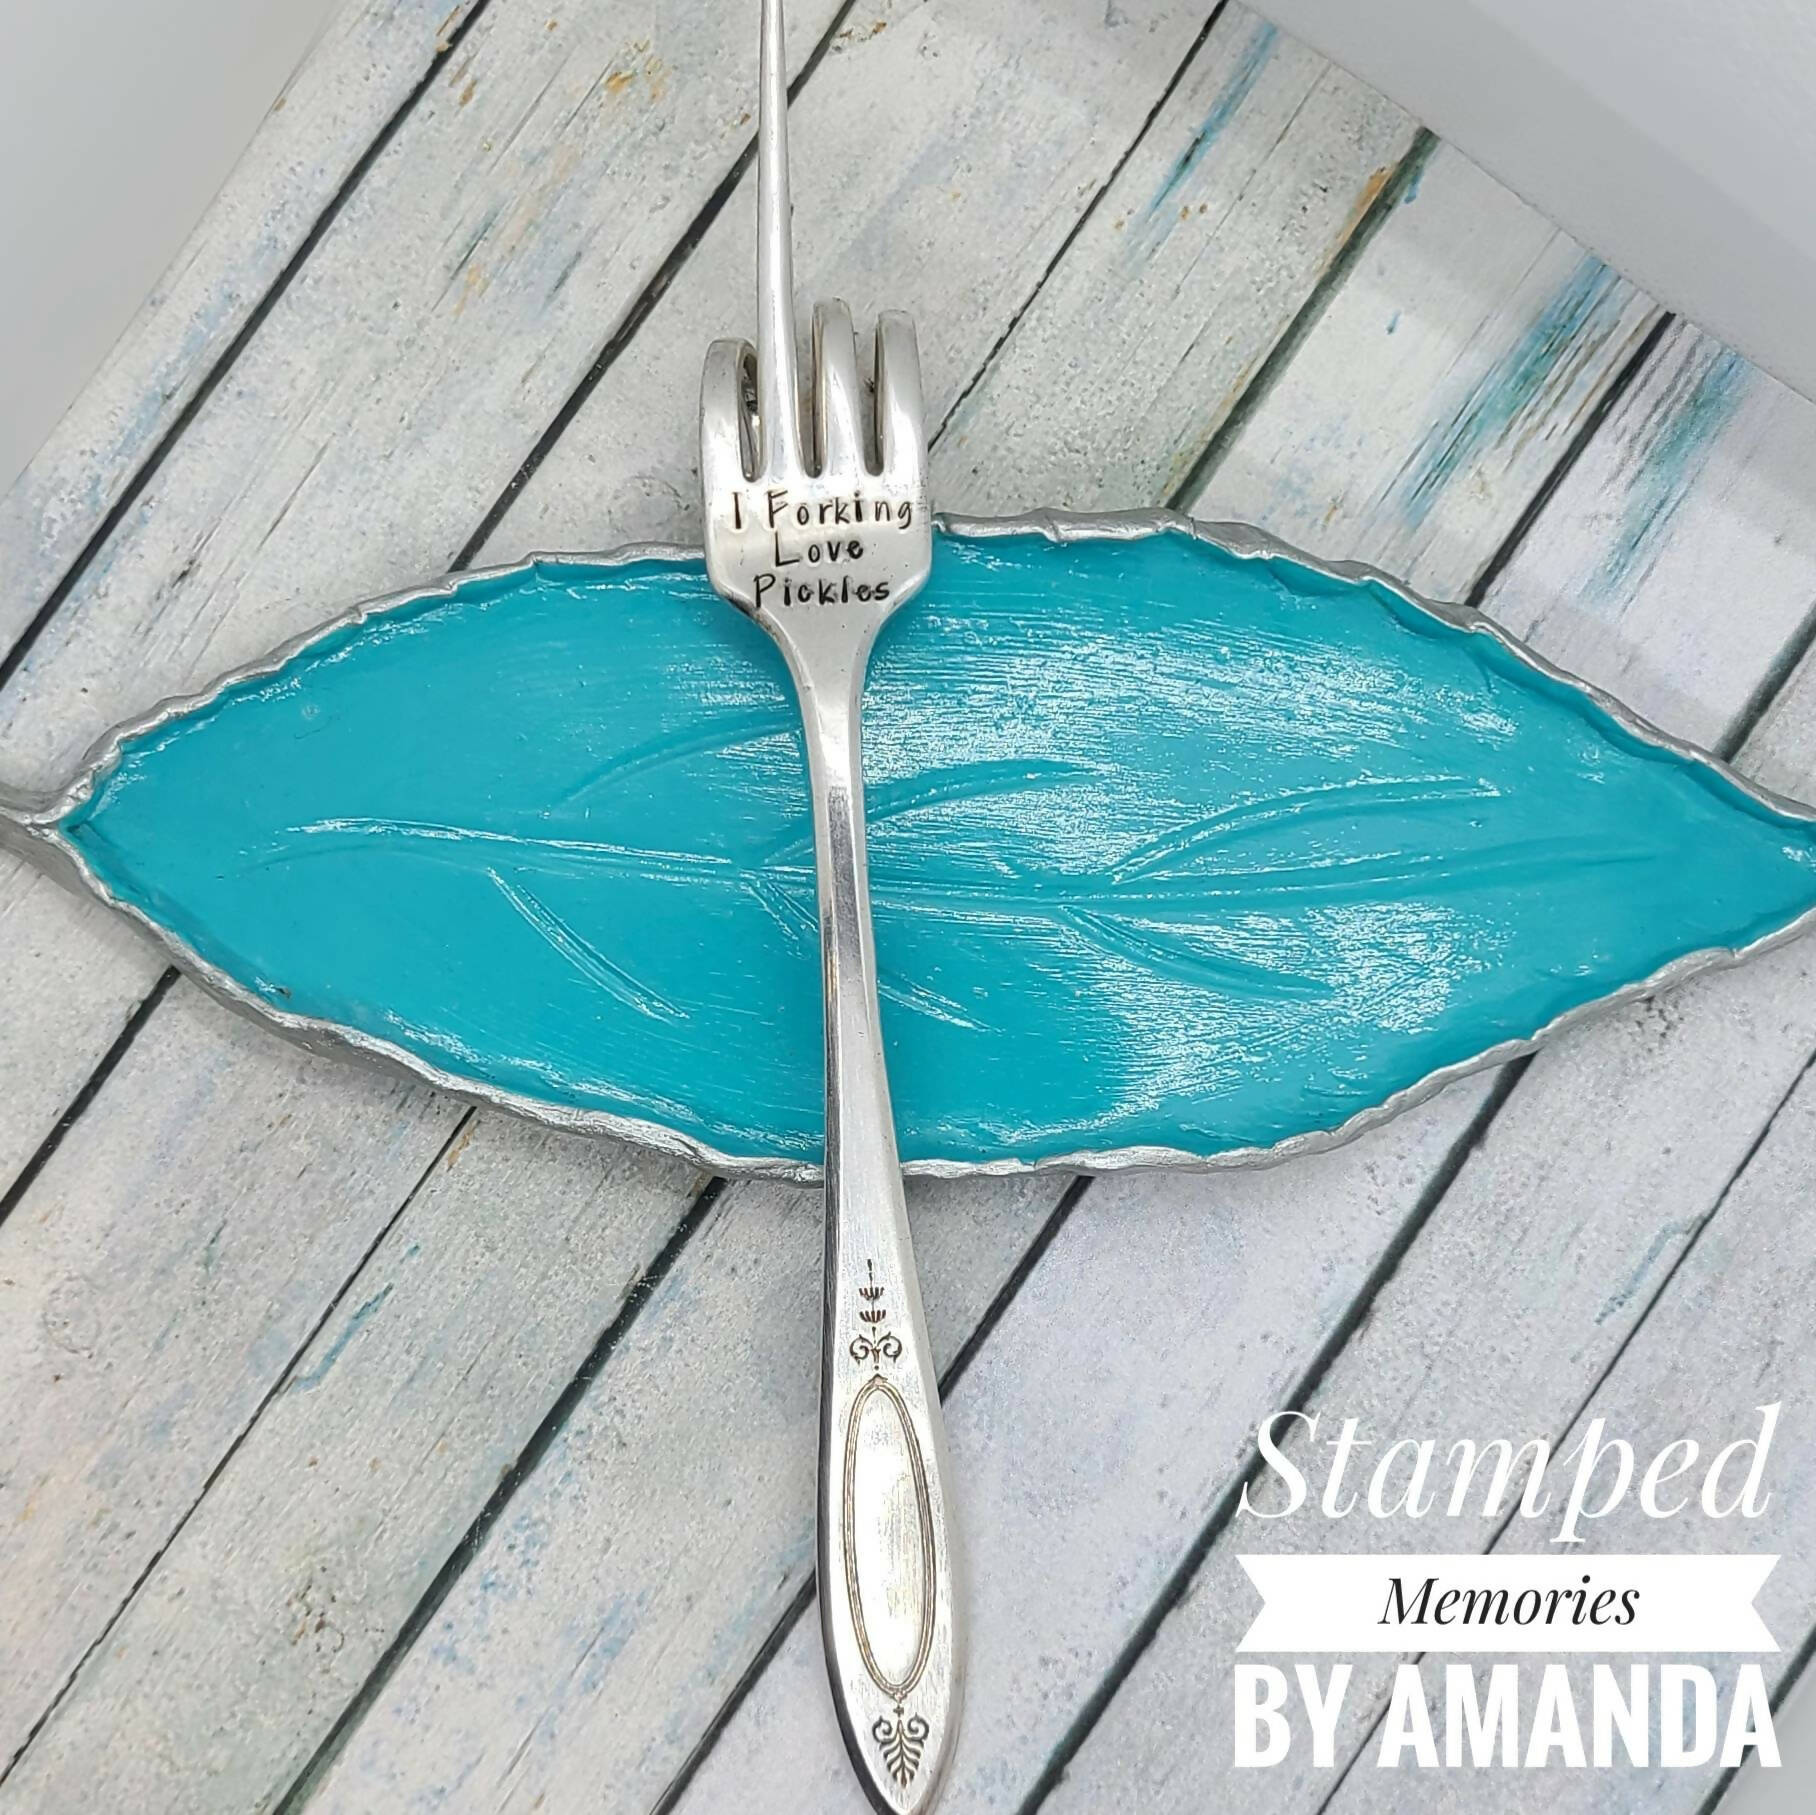 Stamped Memories by Amanda | I forking love pickles fork